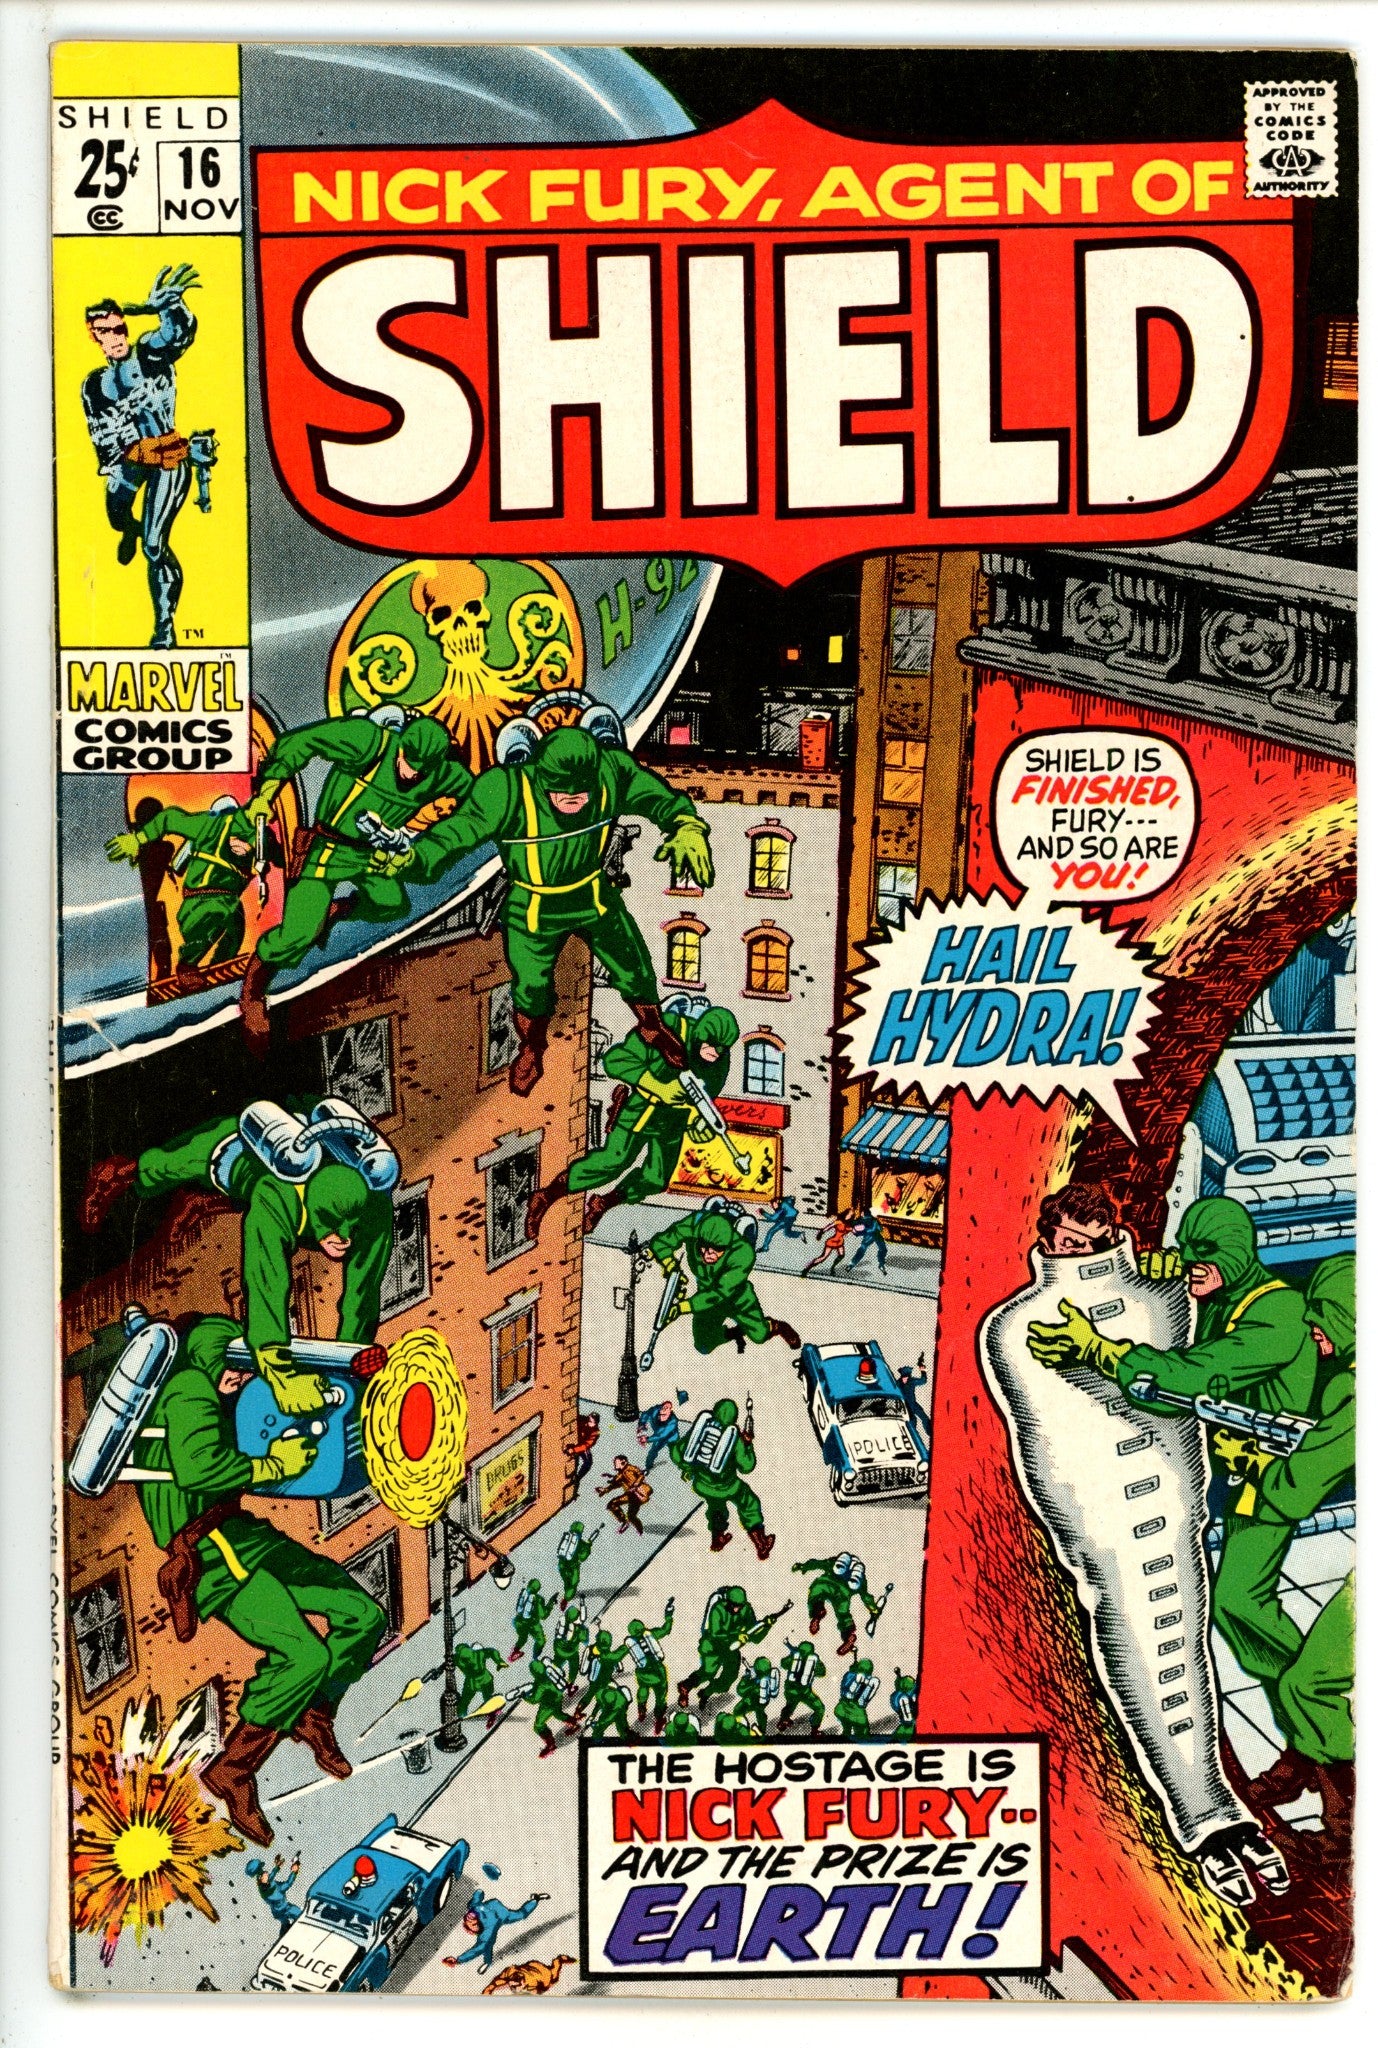 Nick Fury, Agent of SHIELD Vol 1 16 FN- (5.5) (1970) 